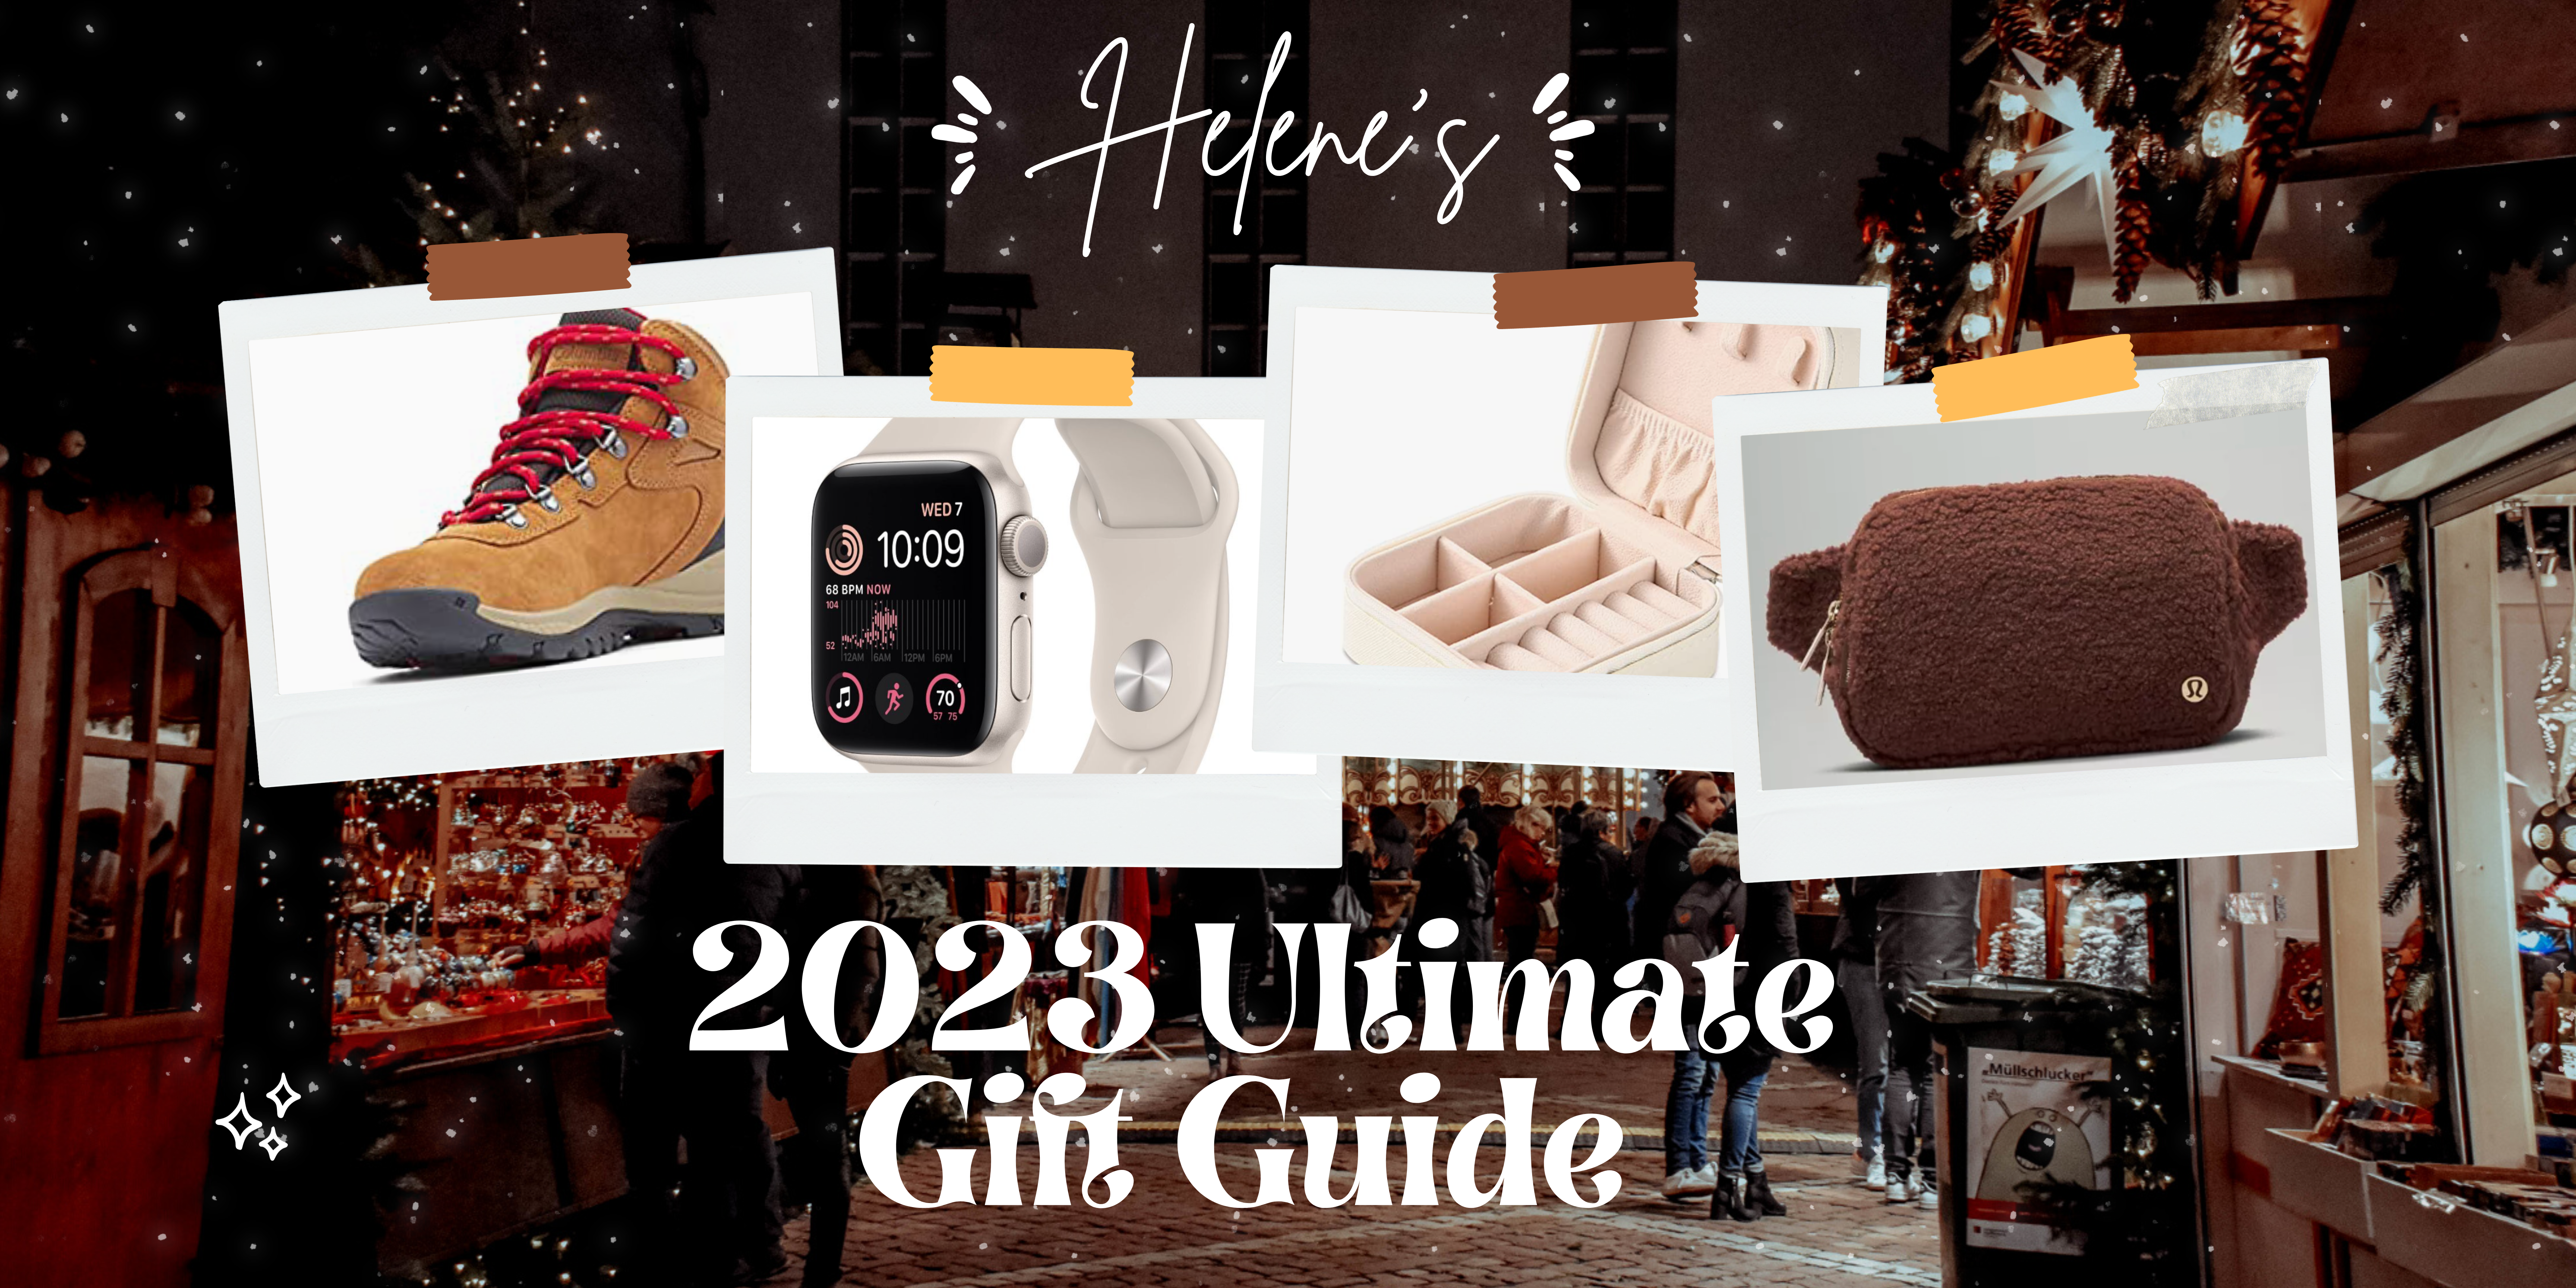 helenes gift guide 3 1